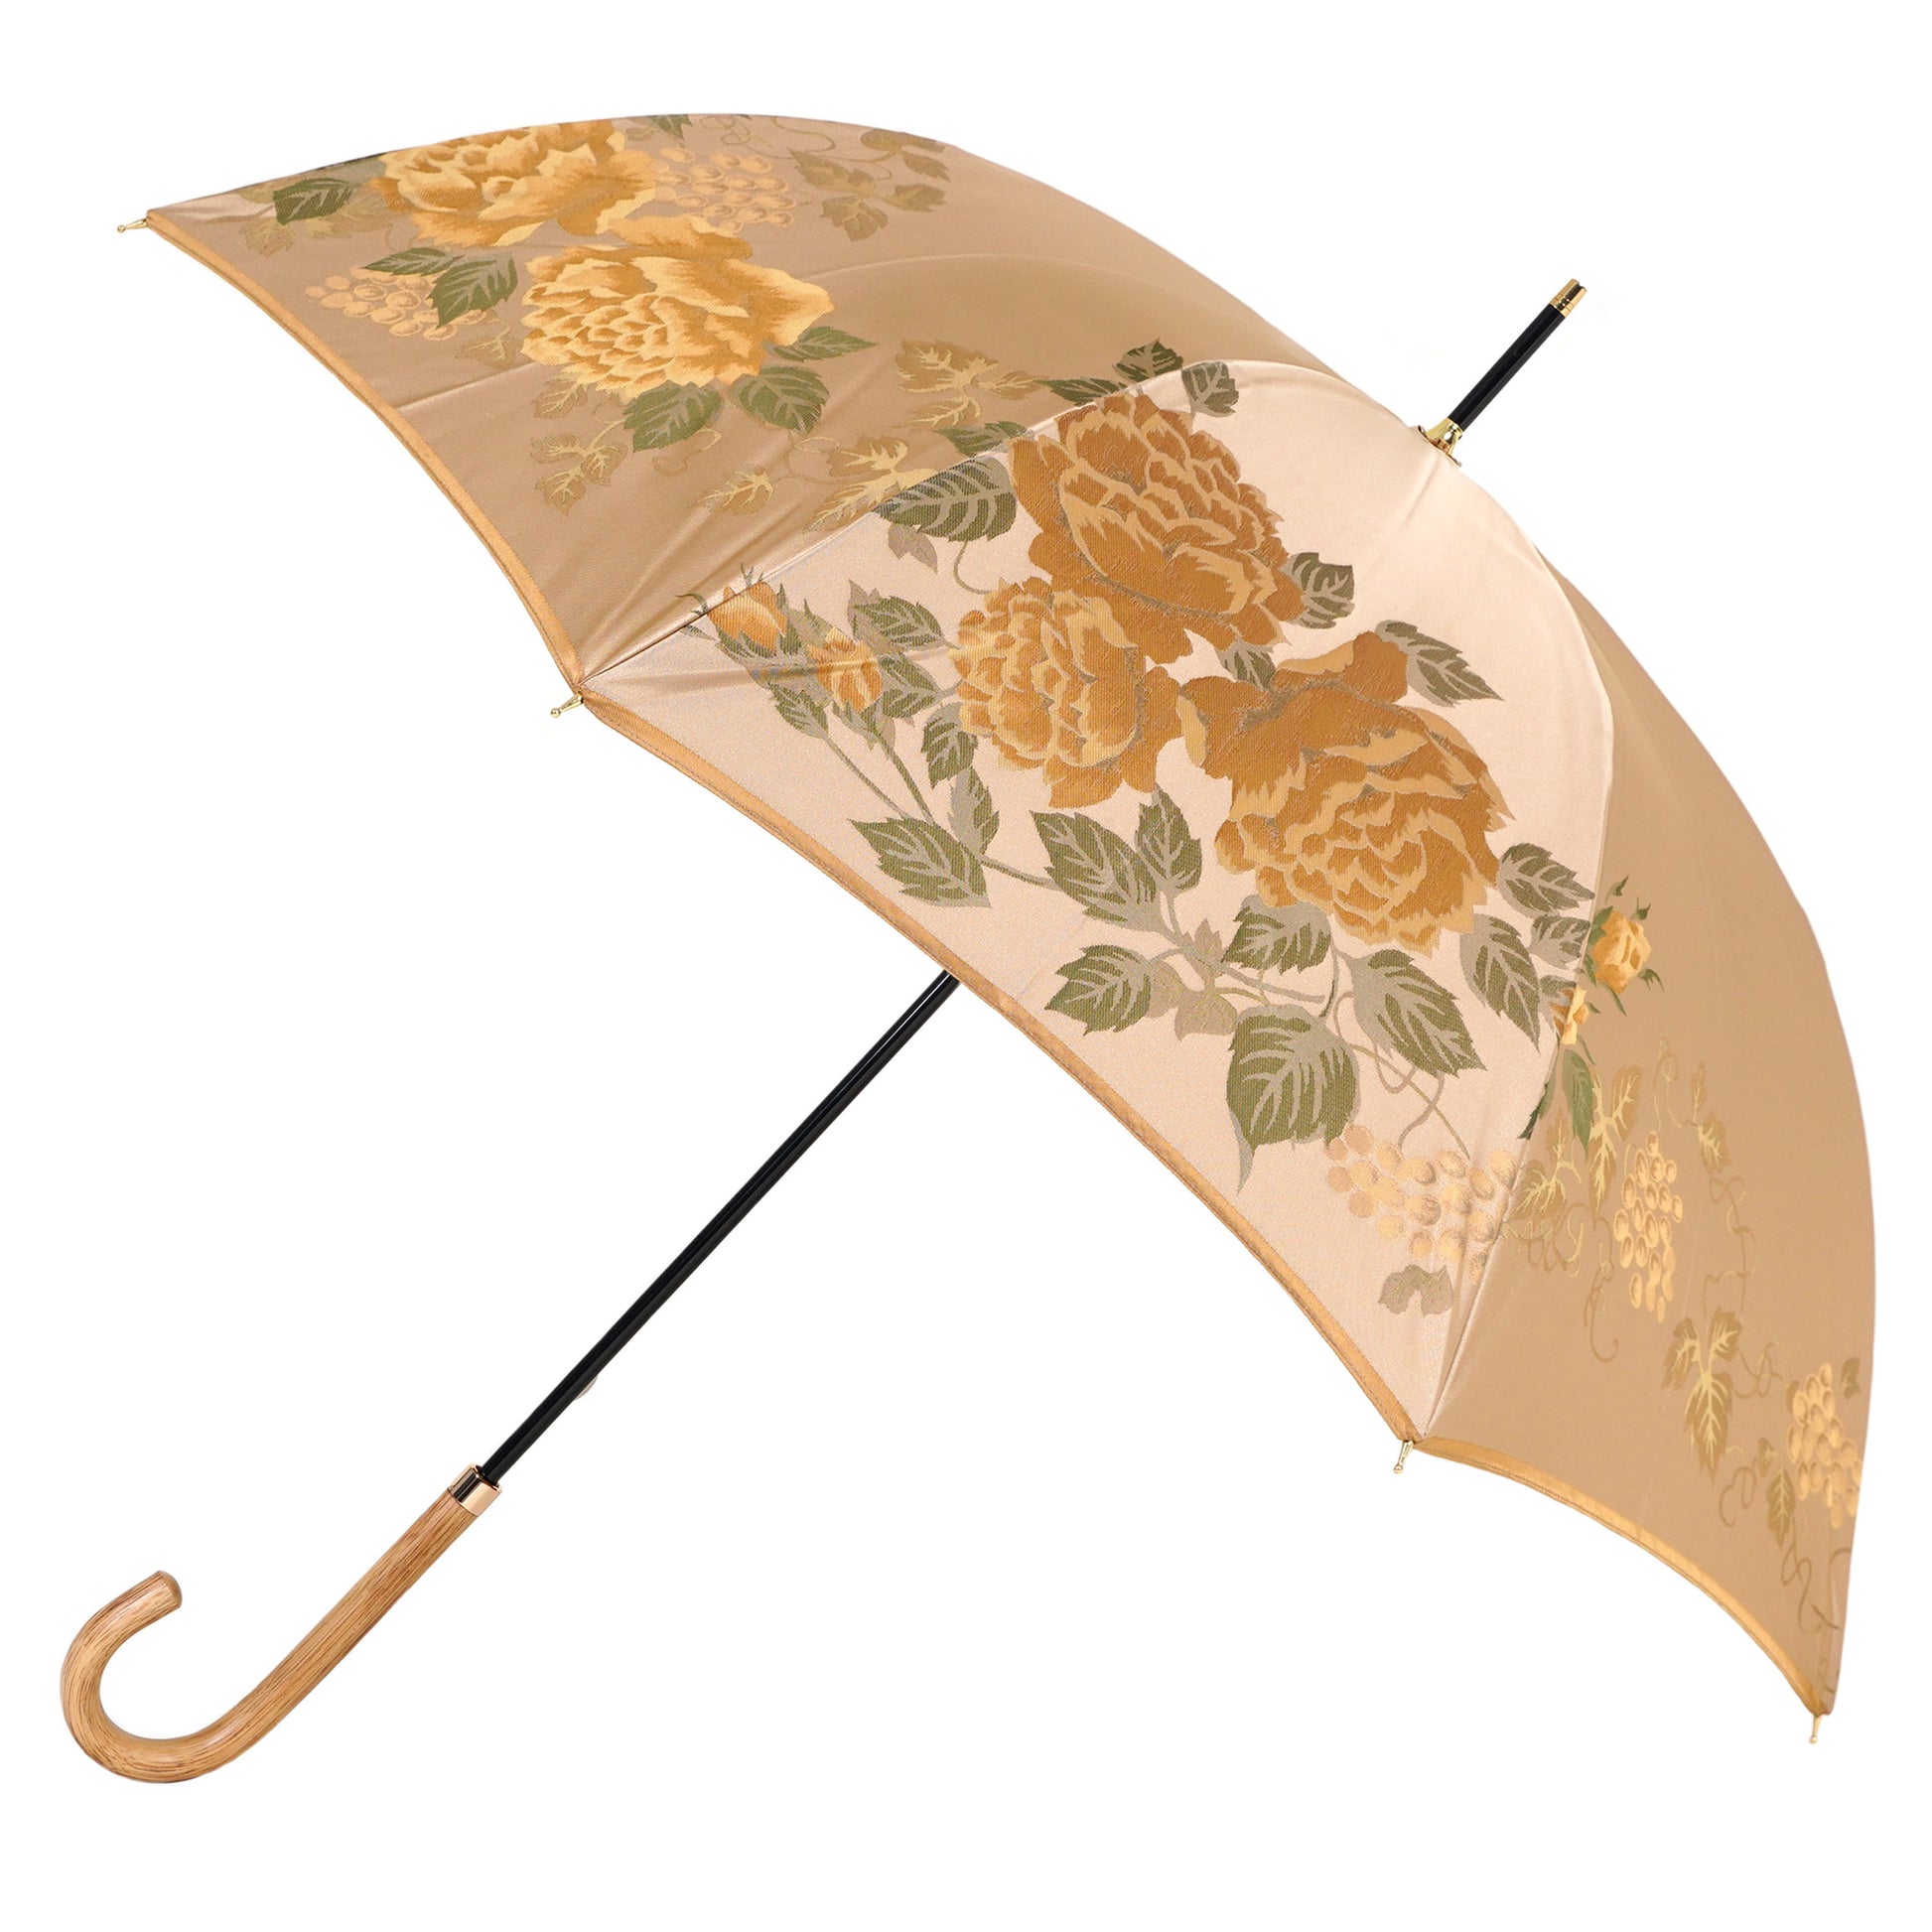 Rain & Sun Umbrella "Rose and Grape" - By Emotion International